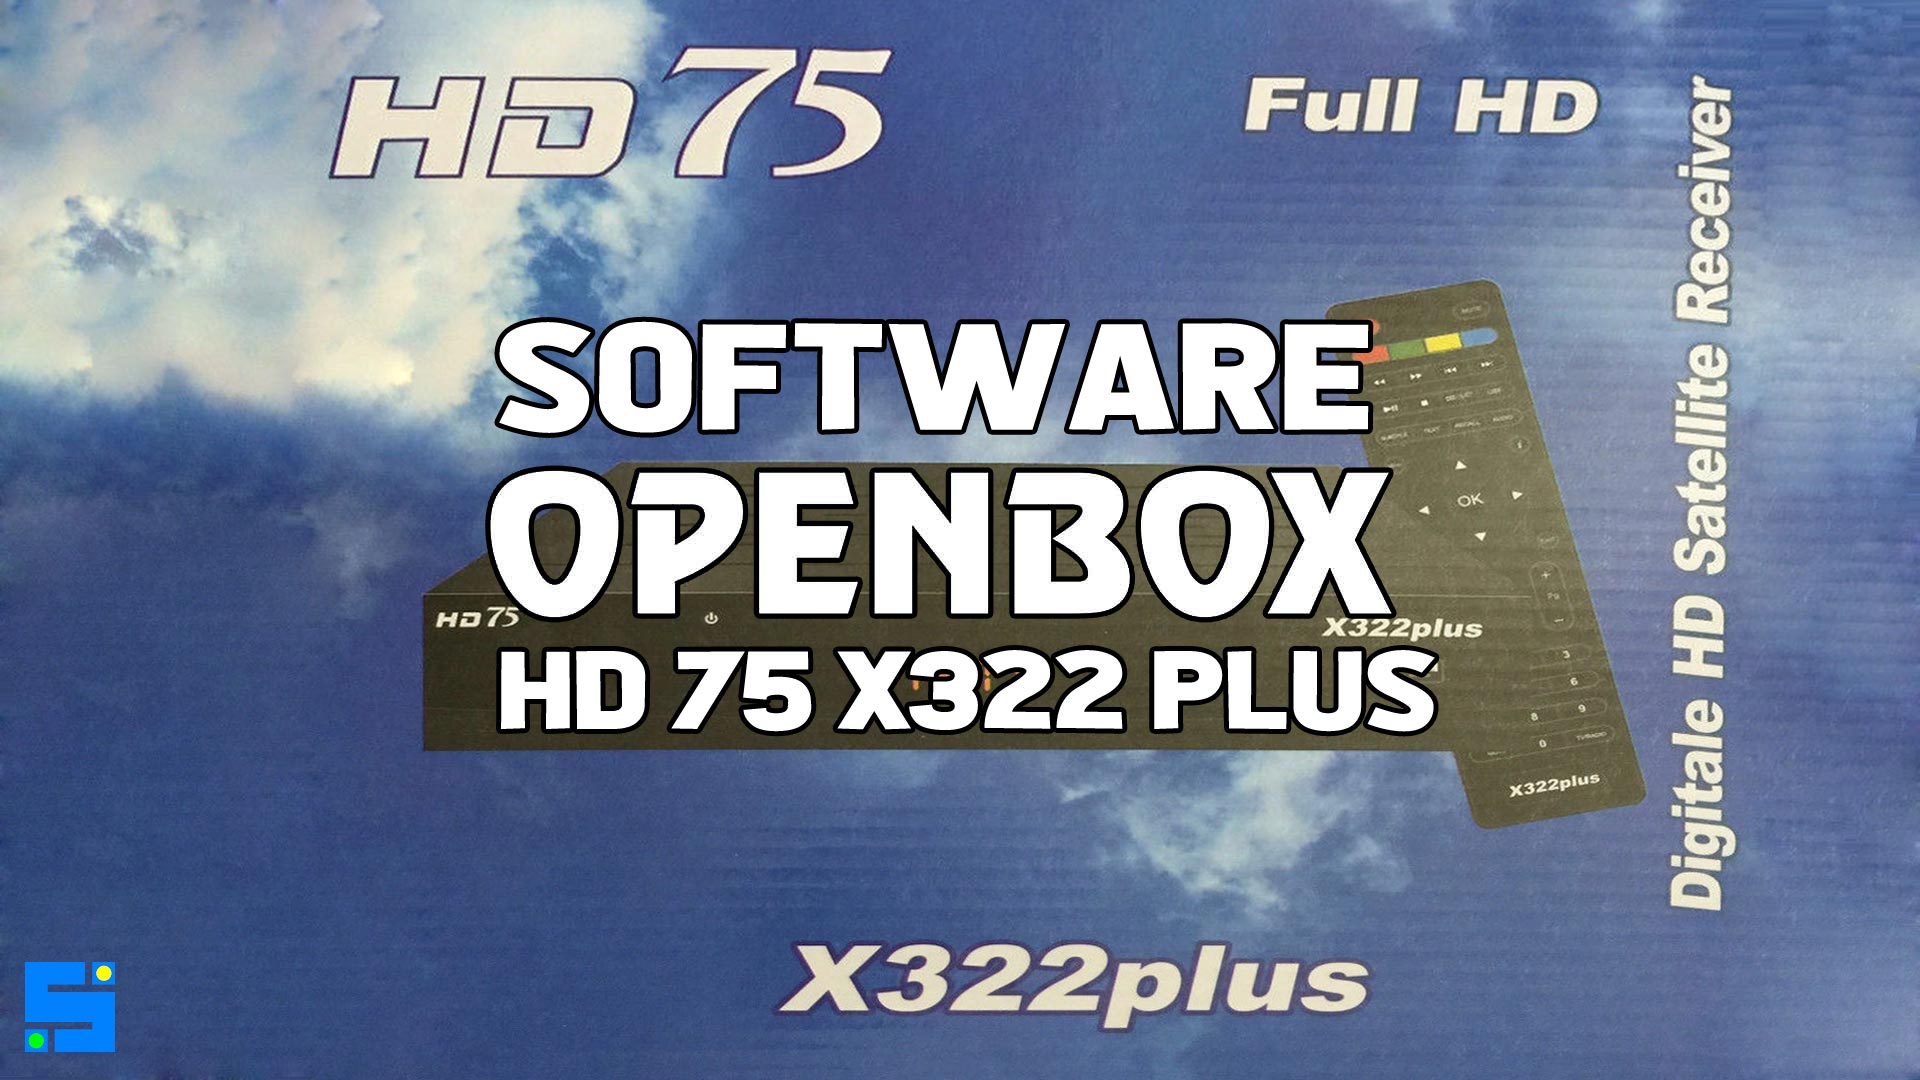 Download Software Openbox Best HD 75 X 322 Plus Firmware Receiver